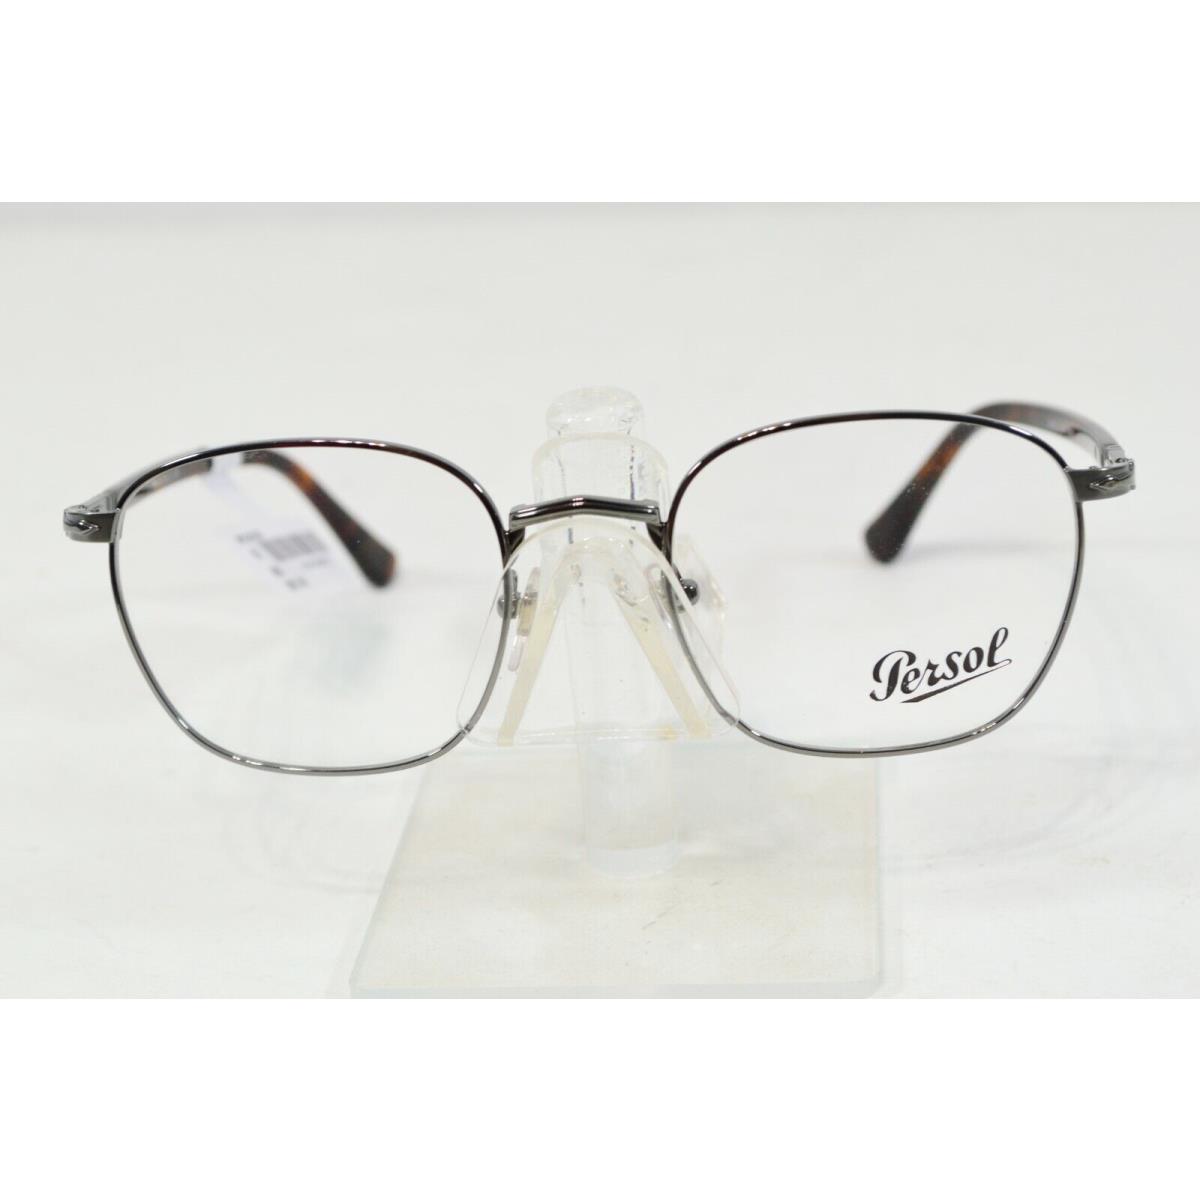 Persol eyeglasses  - Gray Frame 1